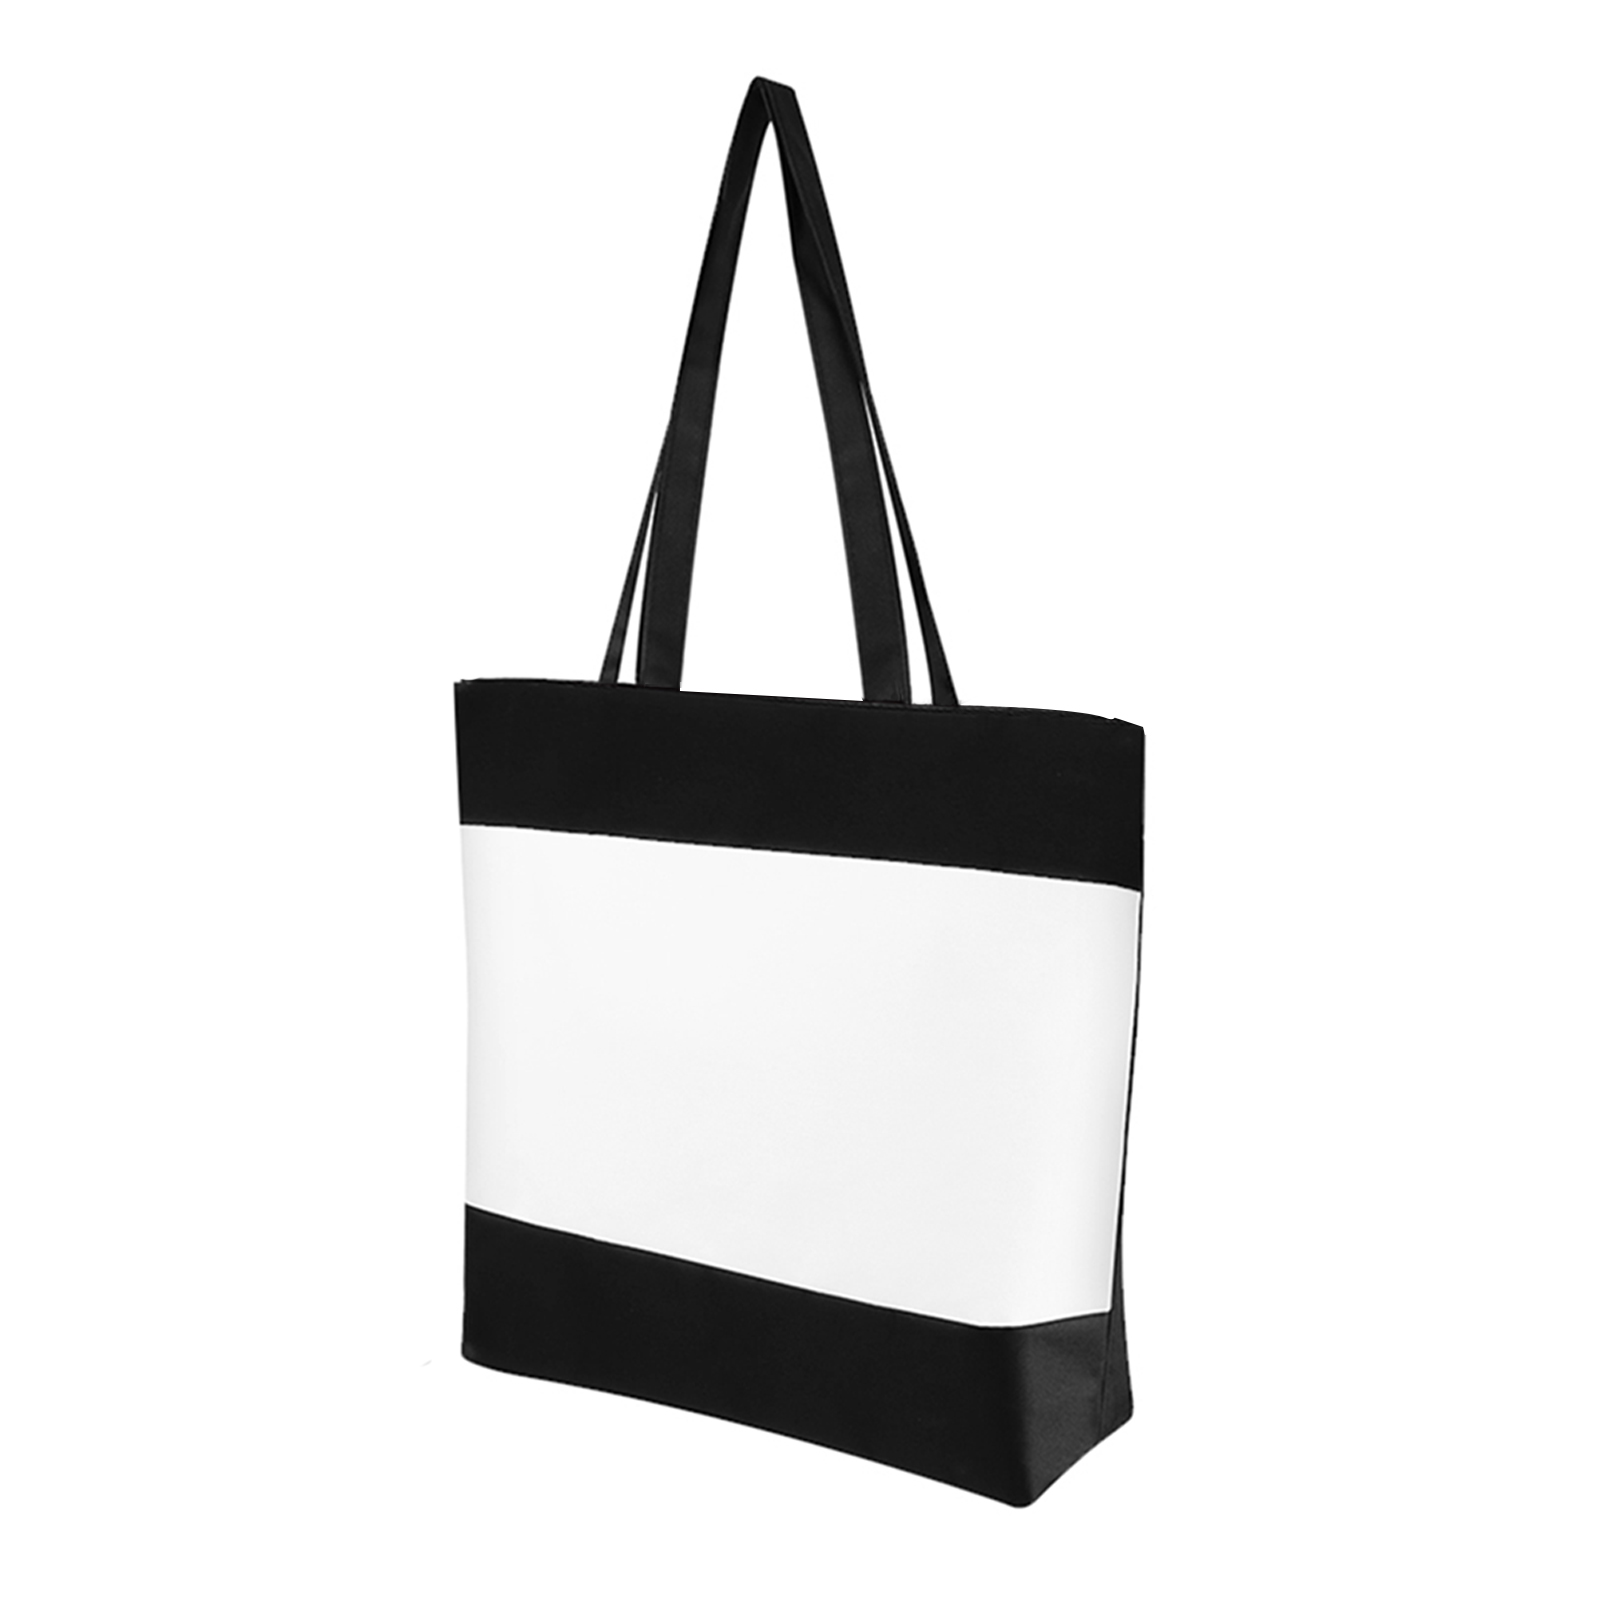 Muka Sample Large Bag, Cotton Canvas Bag with Zipper, 11 3/4 x 9 1